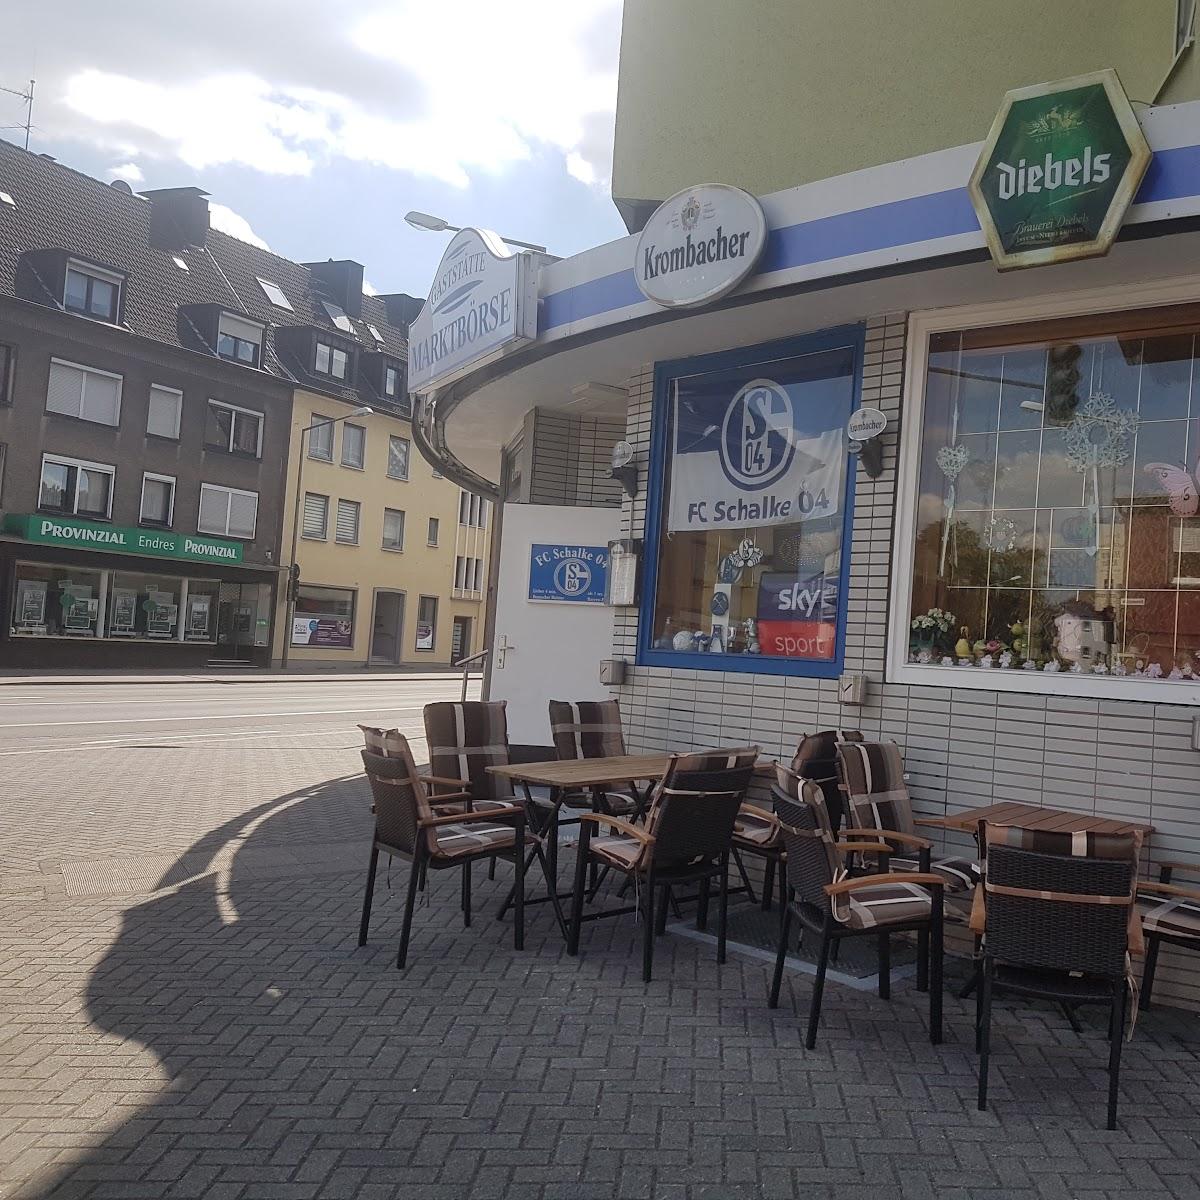 Restaurant "Marktbörse" in Bottrop